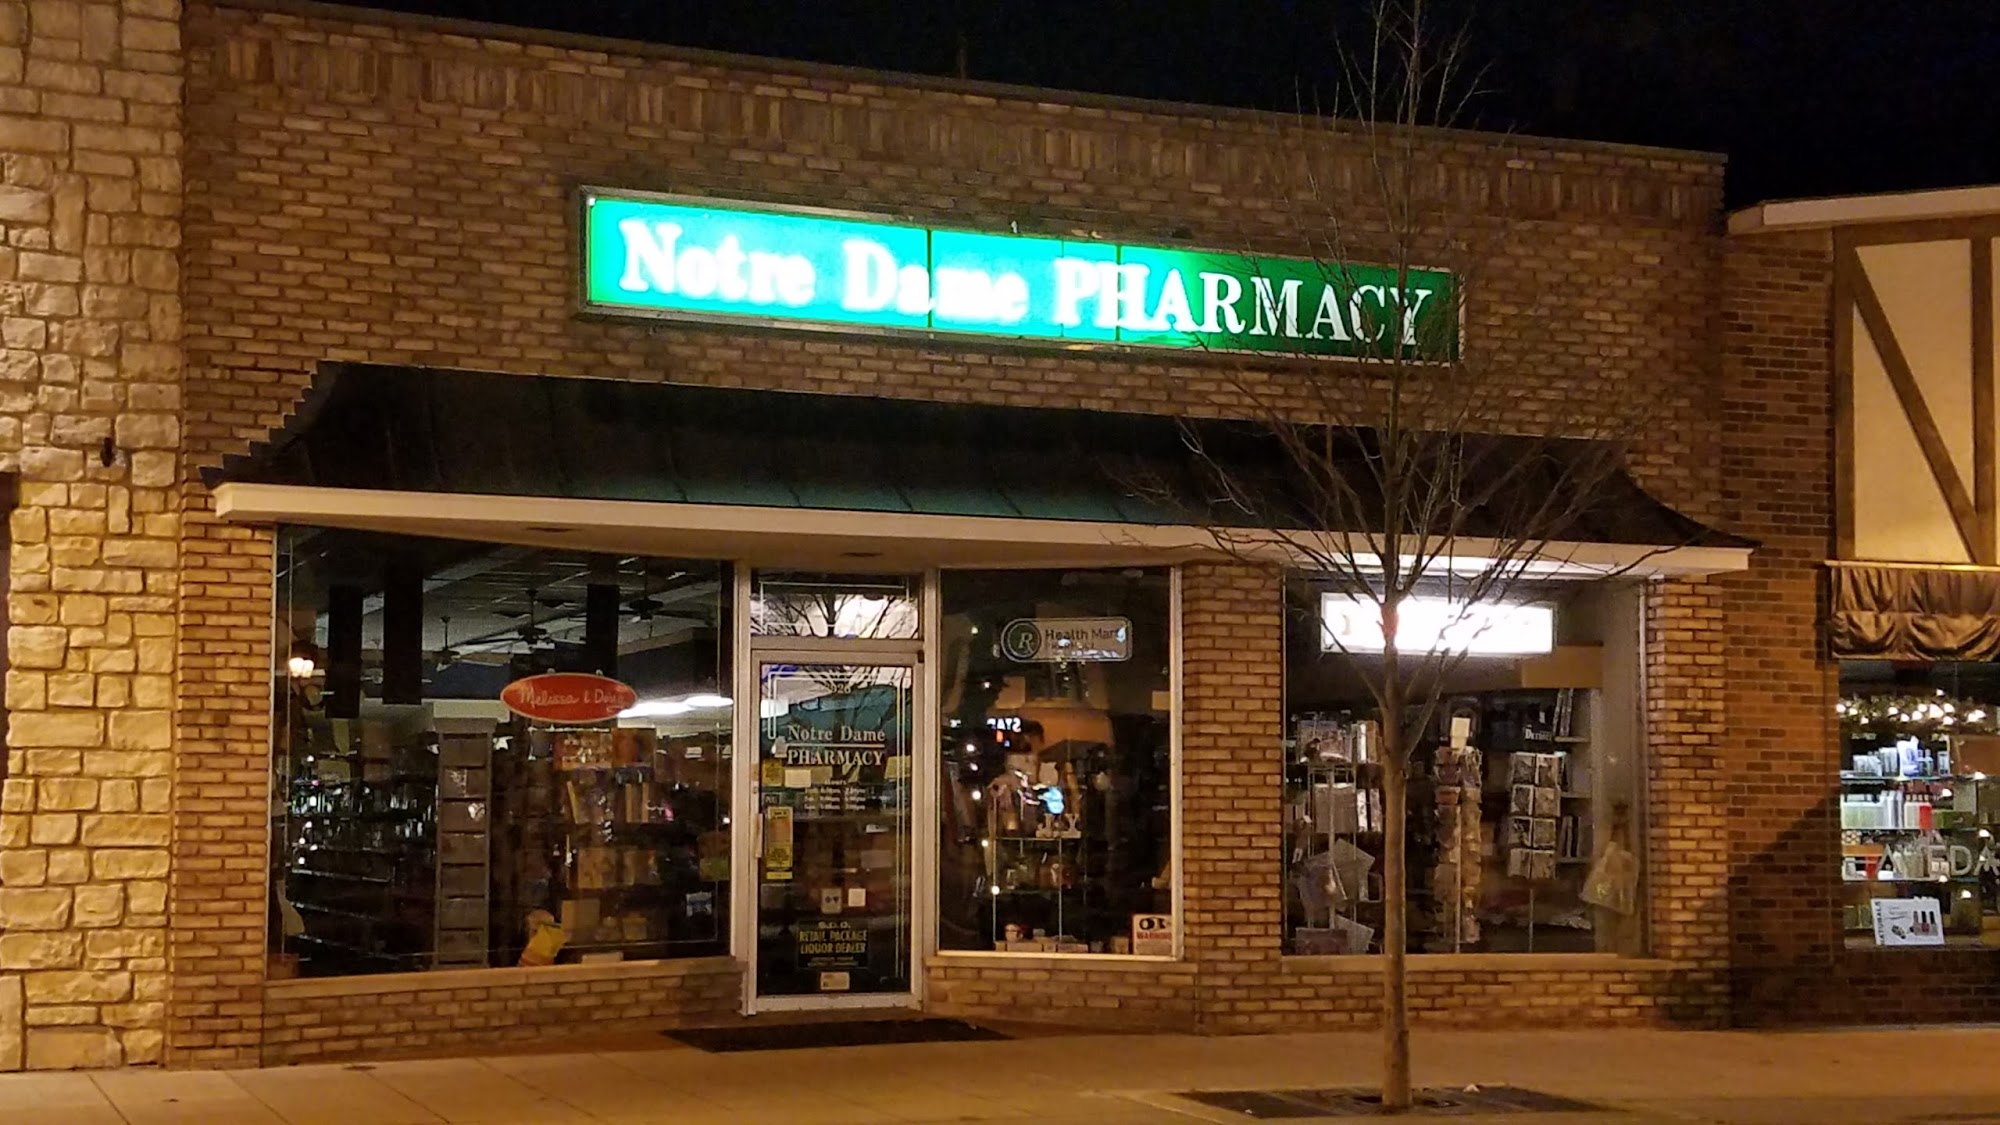 Notre Dame Pharmacy